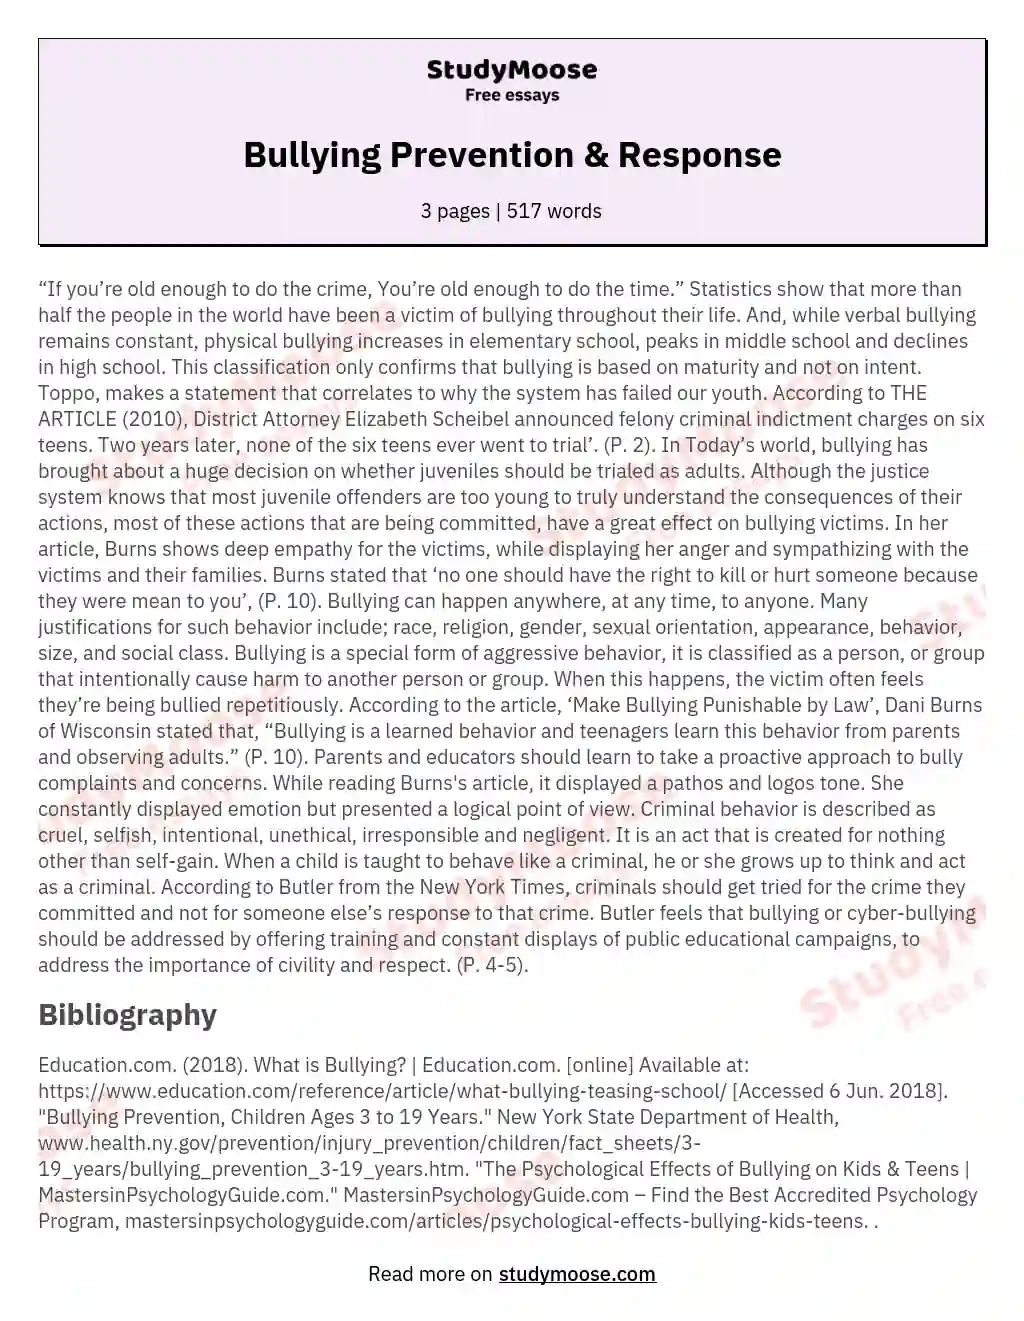 Bullying Prevention & Response essay